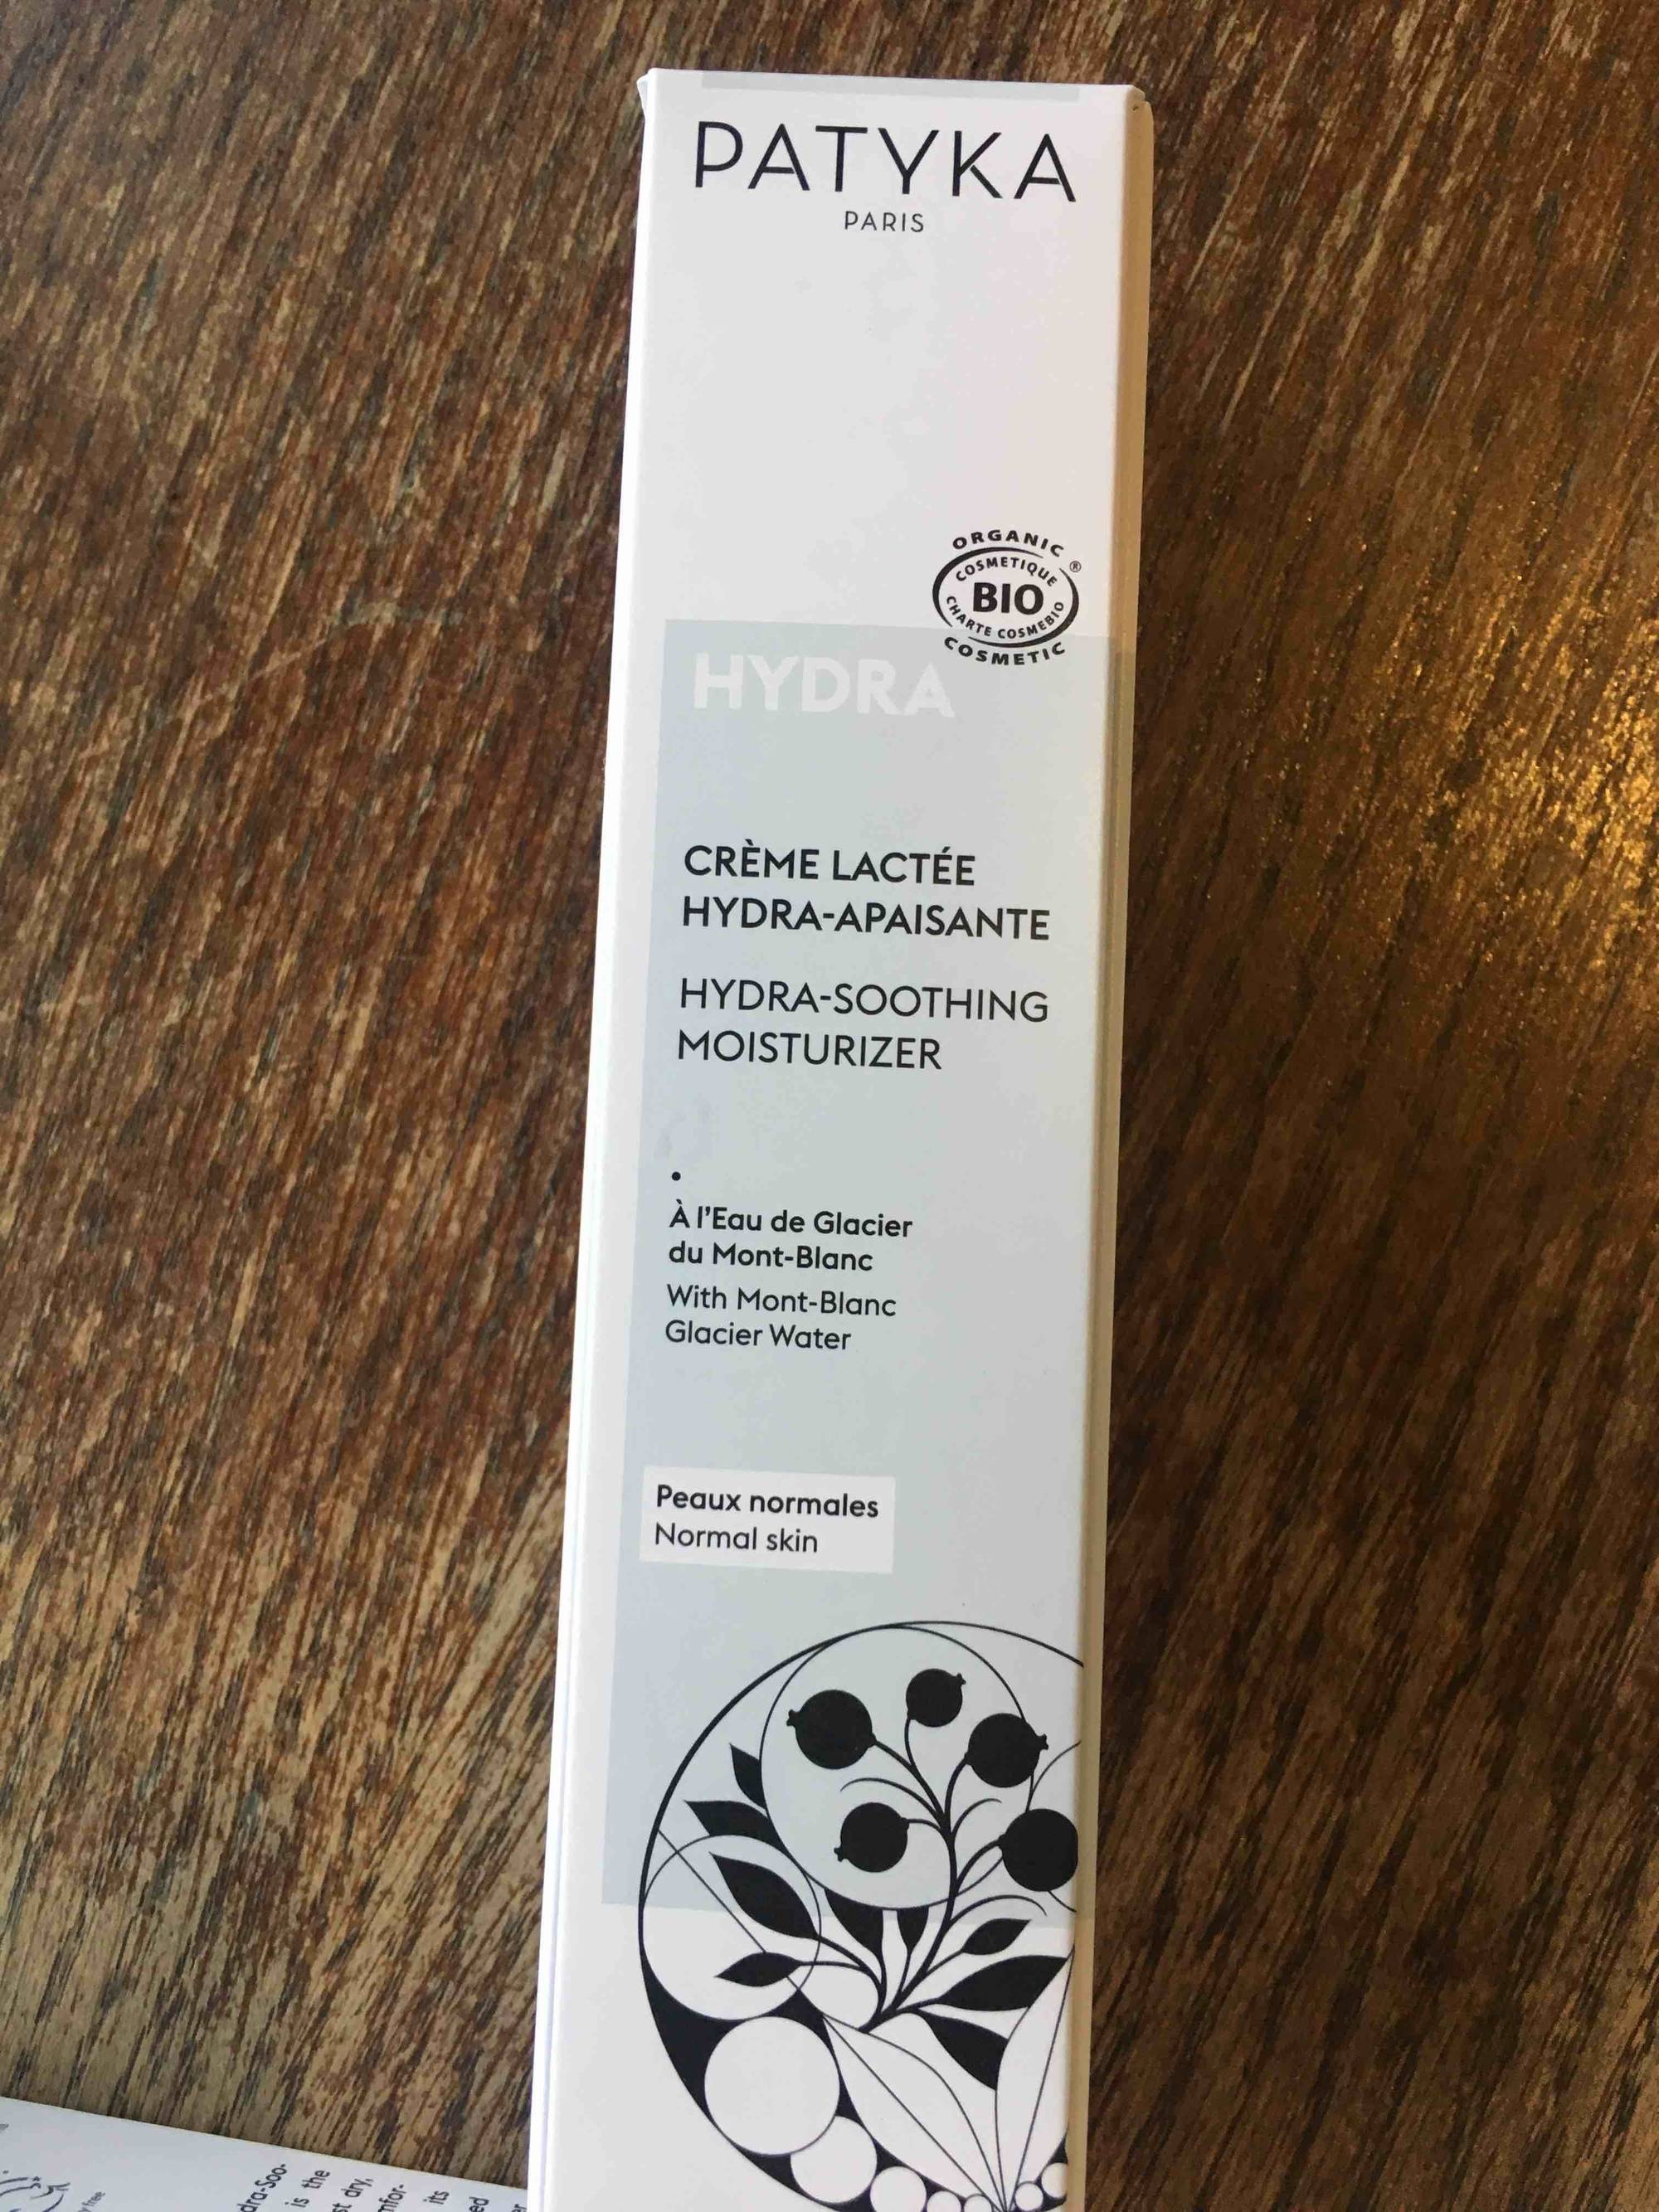 PATYKA - Hydra - Crème lactée hydra-apaisante